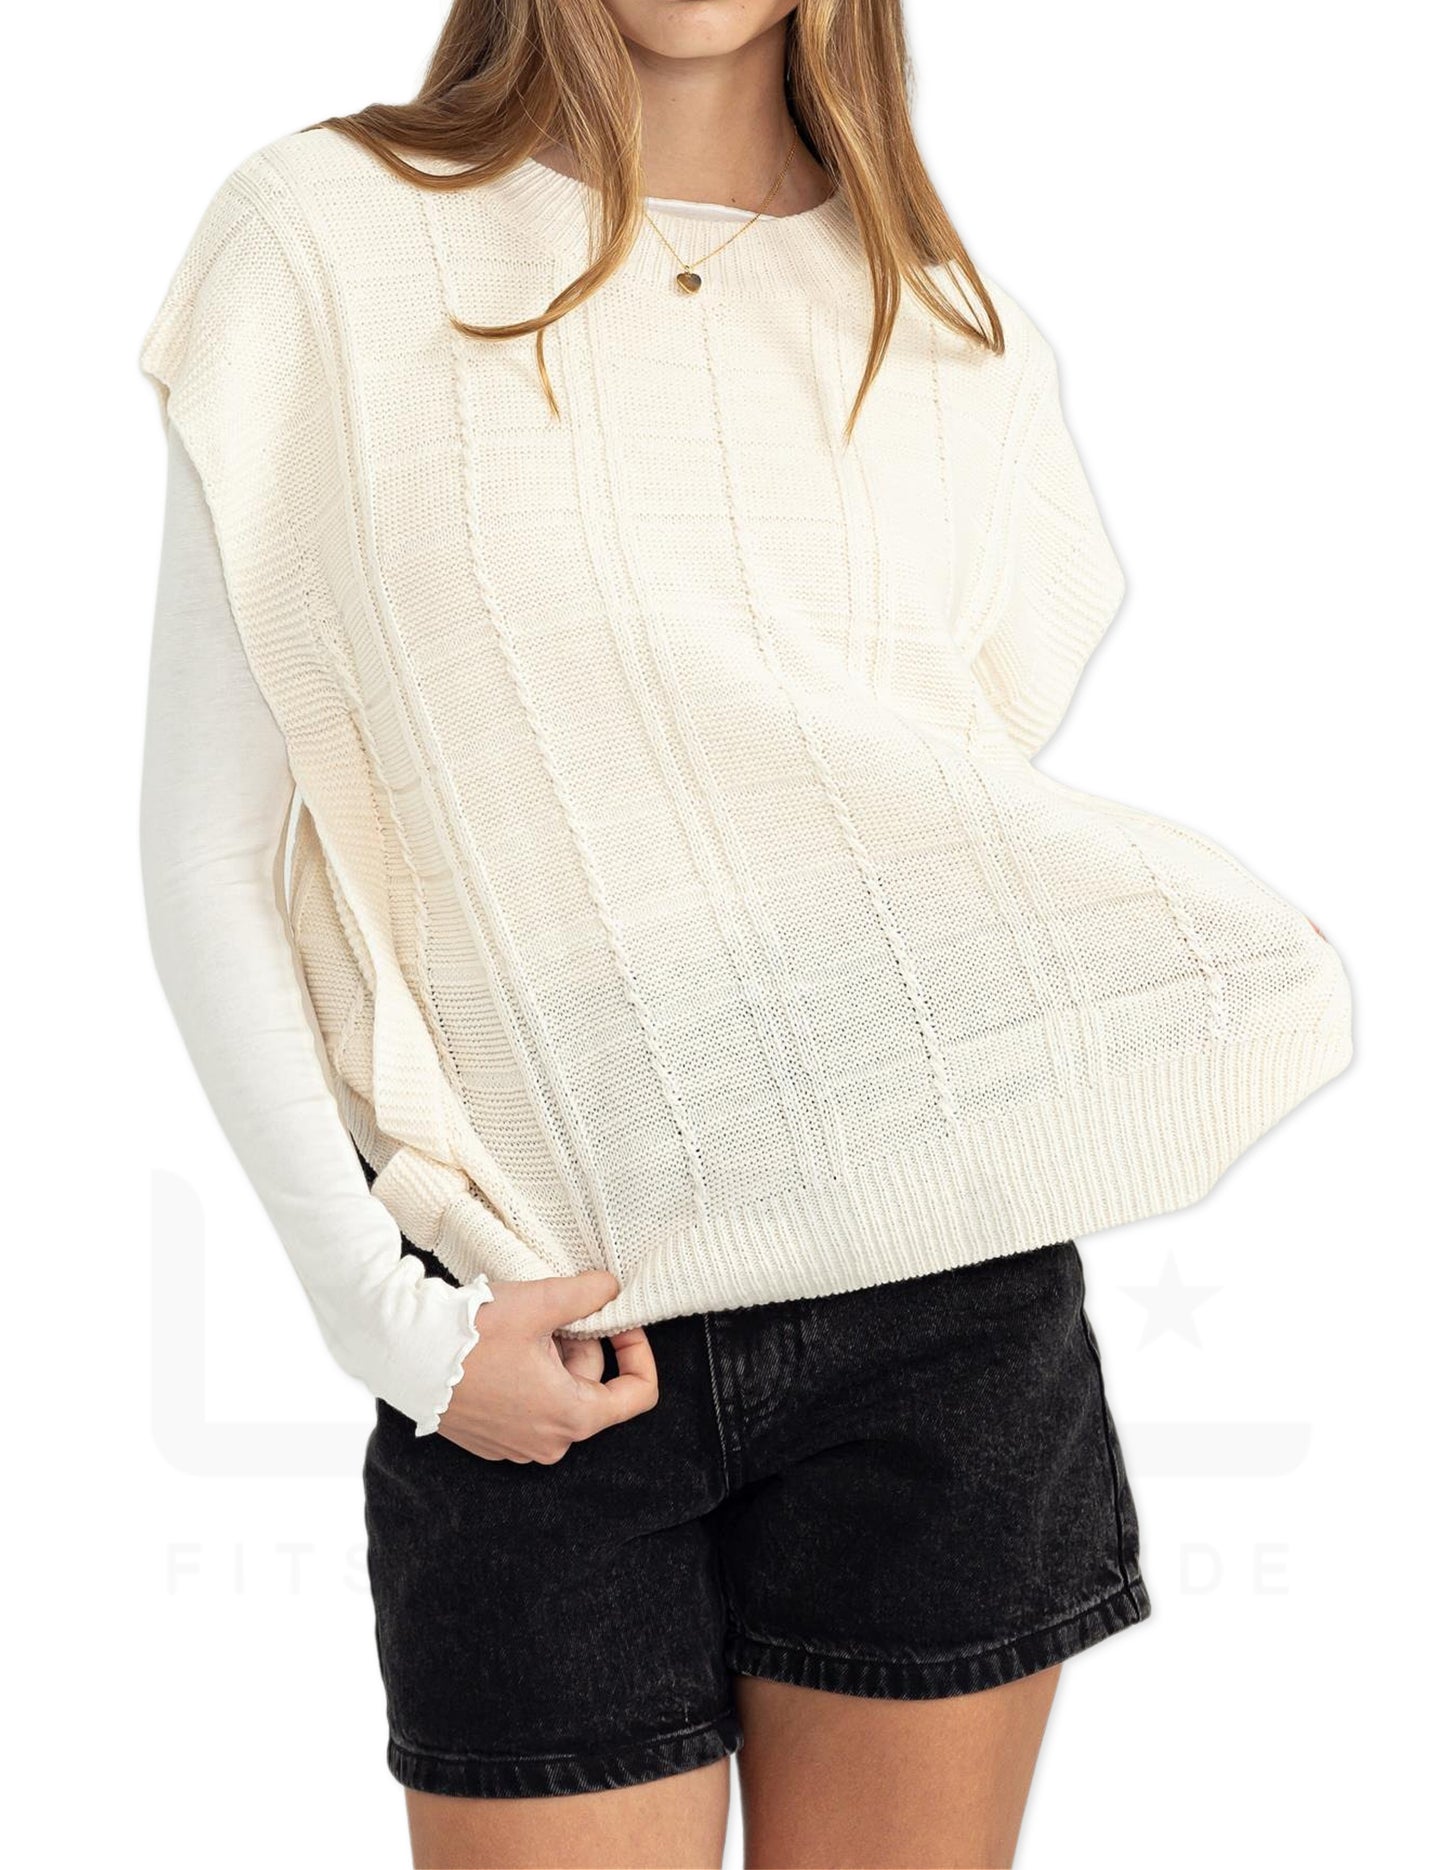 Sleeveless Oversized Cable Knit Sweater Vest - Cream